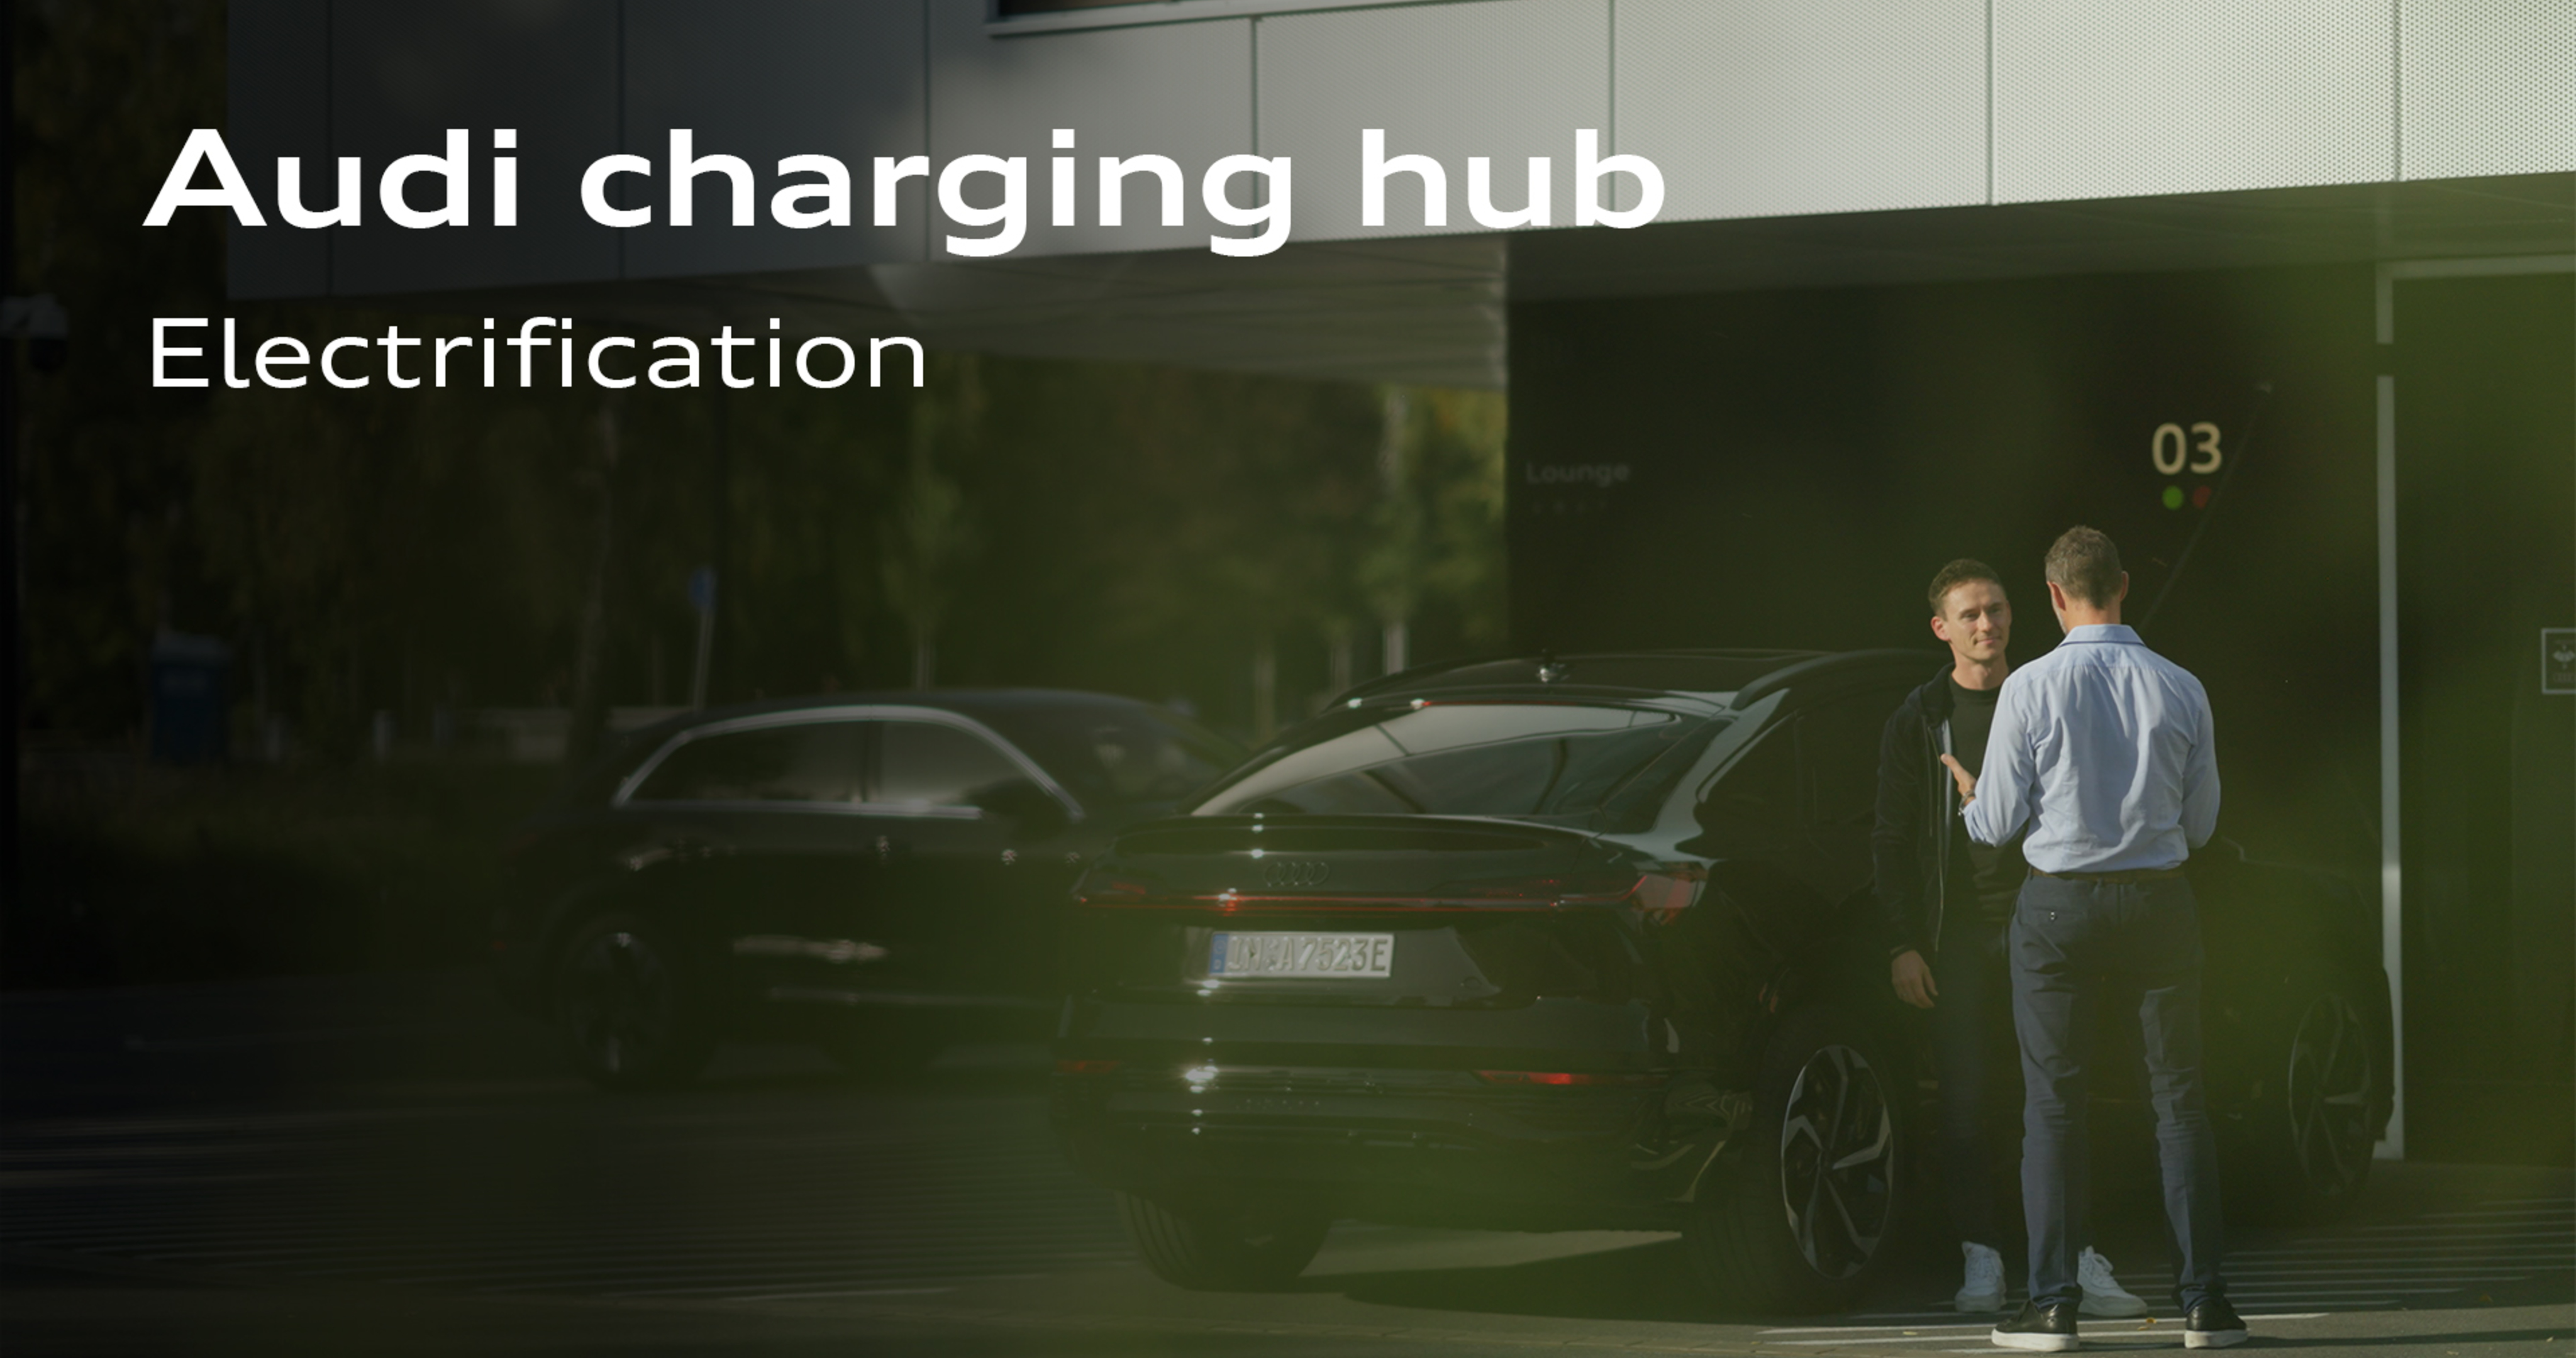 The Audi charging hubs 